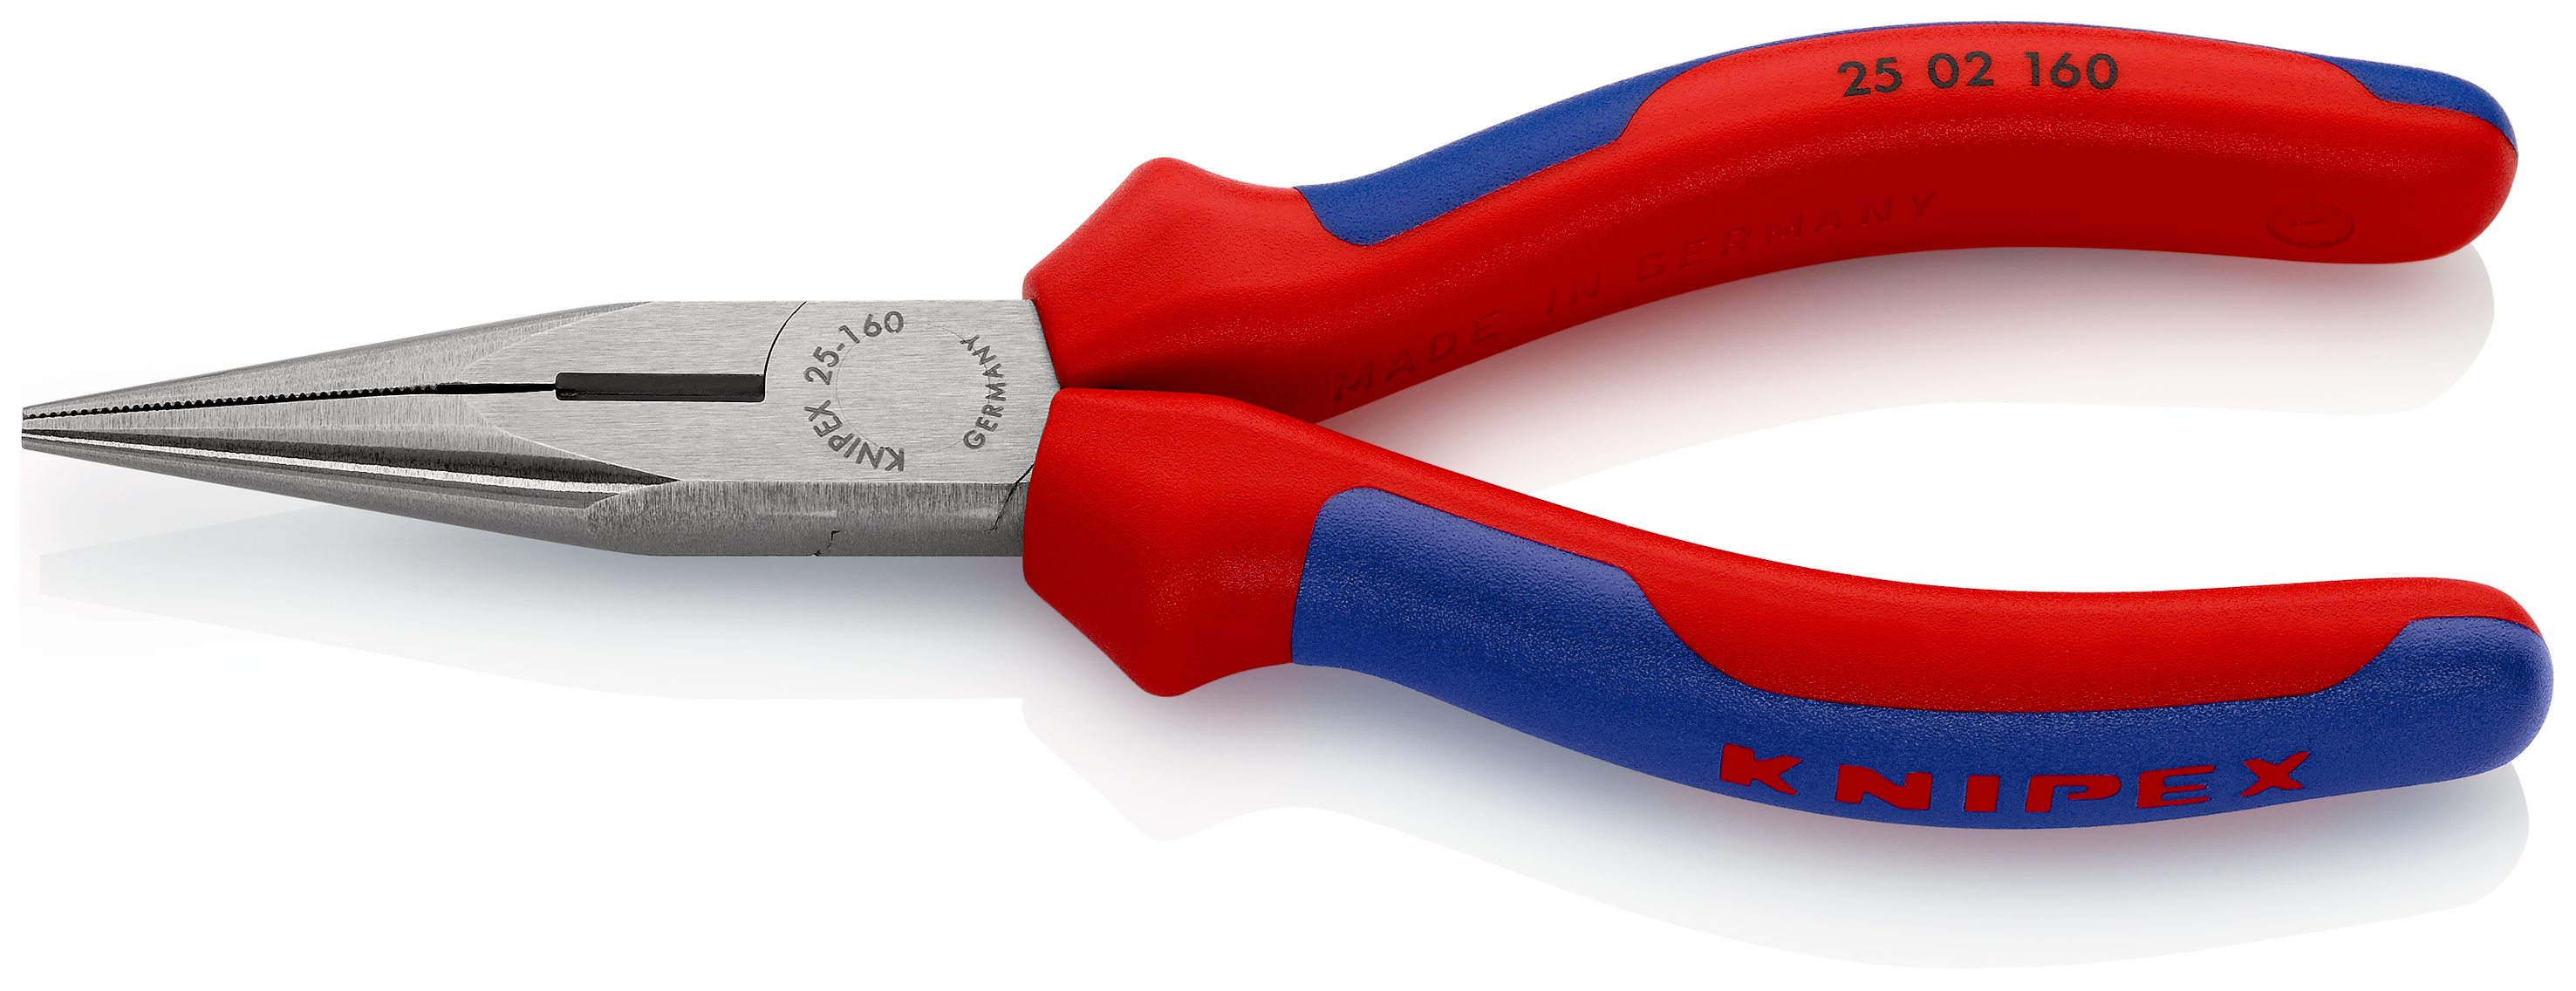 Knipex 2502160 Cleste plat-rotund cu tăiș (patent cu cioc drept), manşoane multicomponent, lungime 160 mm